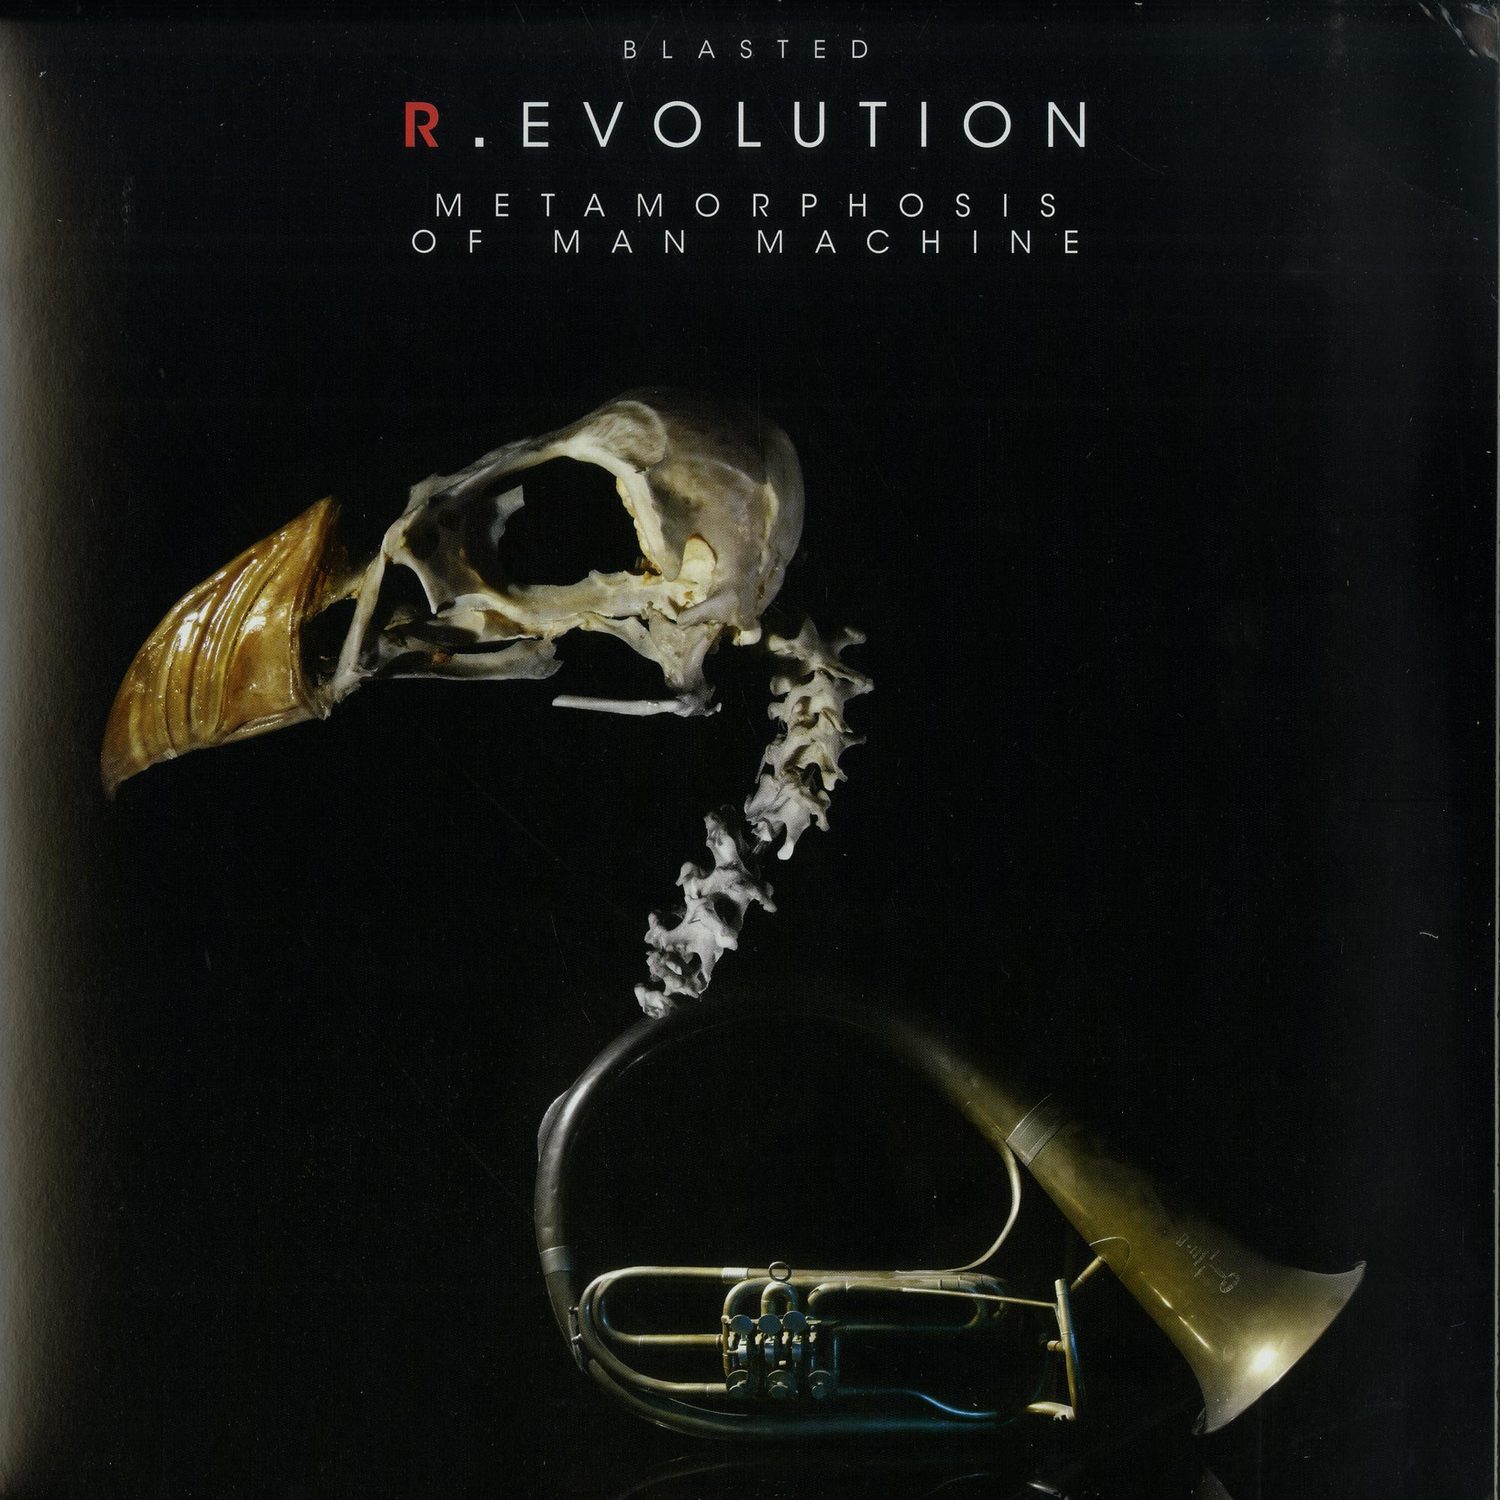 Blasted - R.EVOLUTION